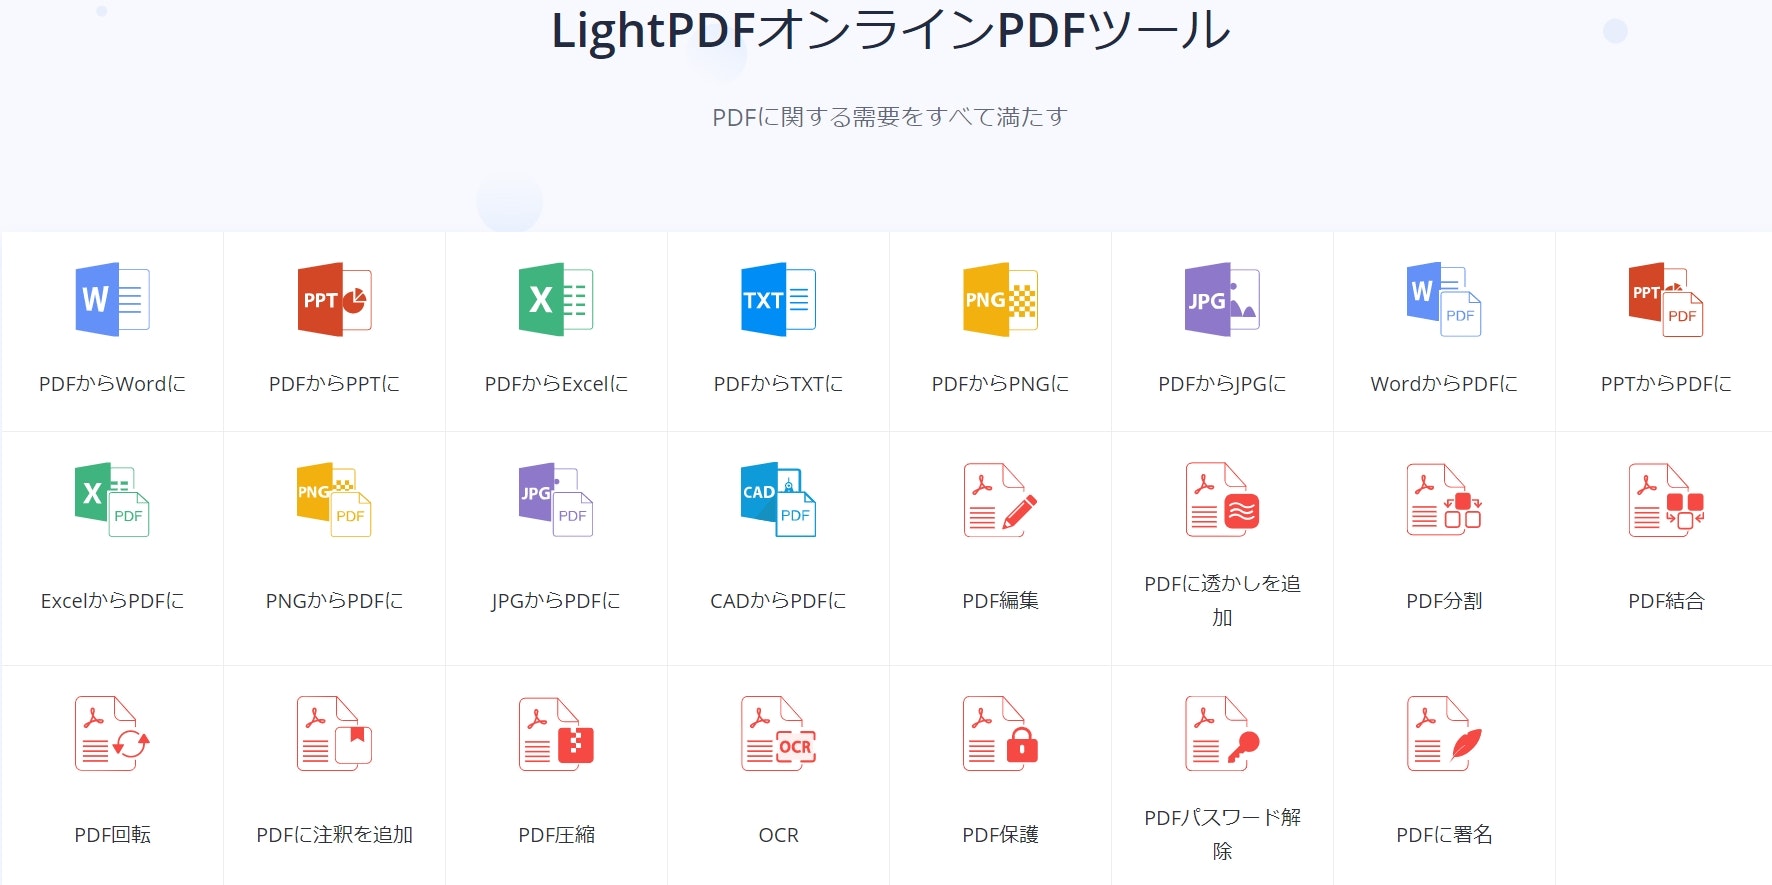 lightpdf-online-tools-interface.jpg